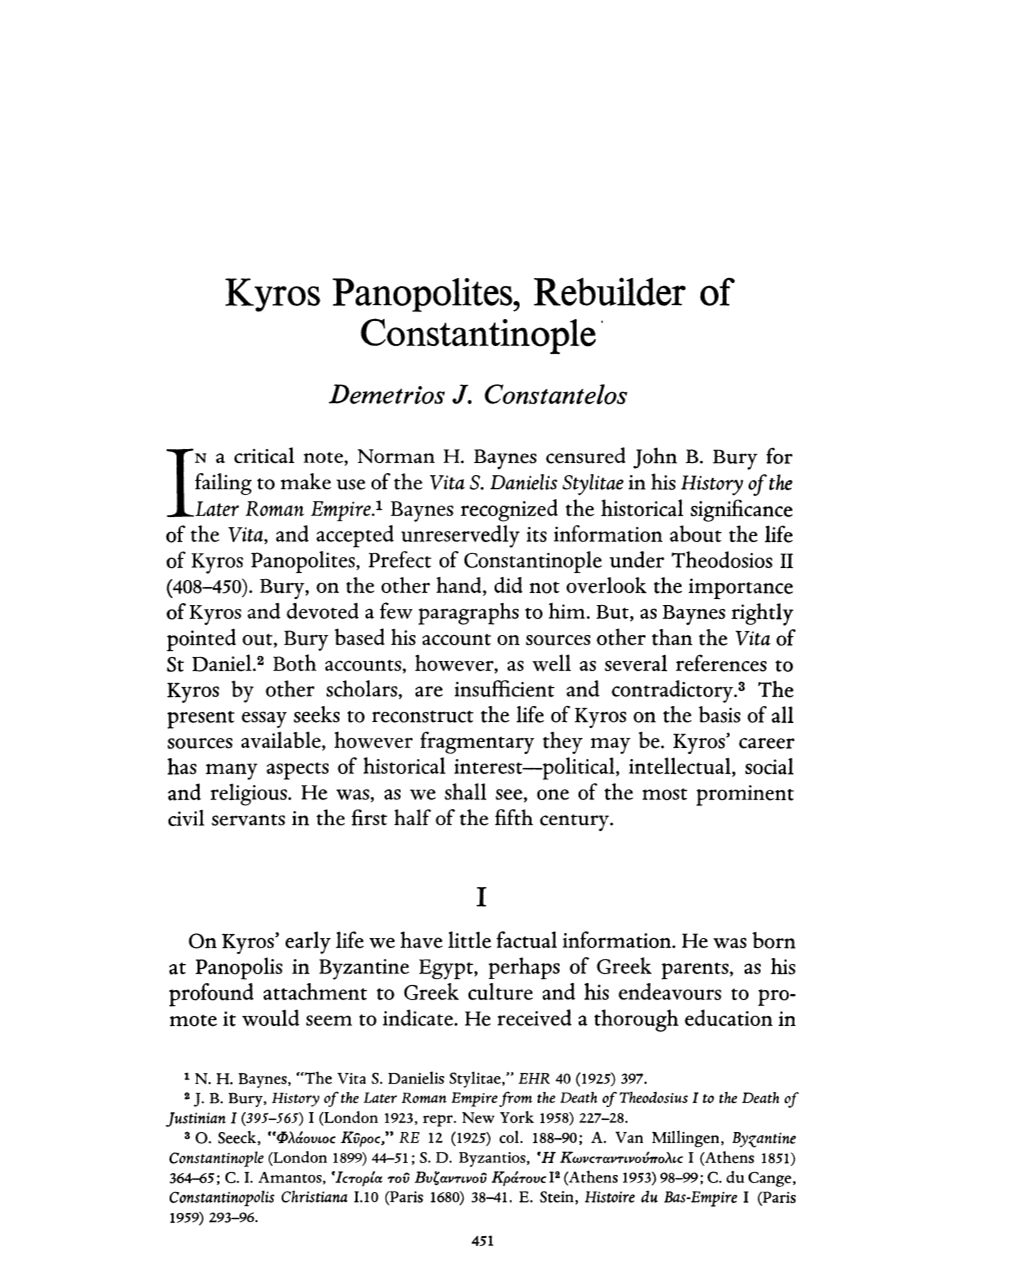 Kyros Panopolites, Rebuilder of Constantinople'